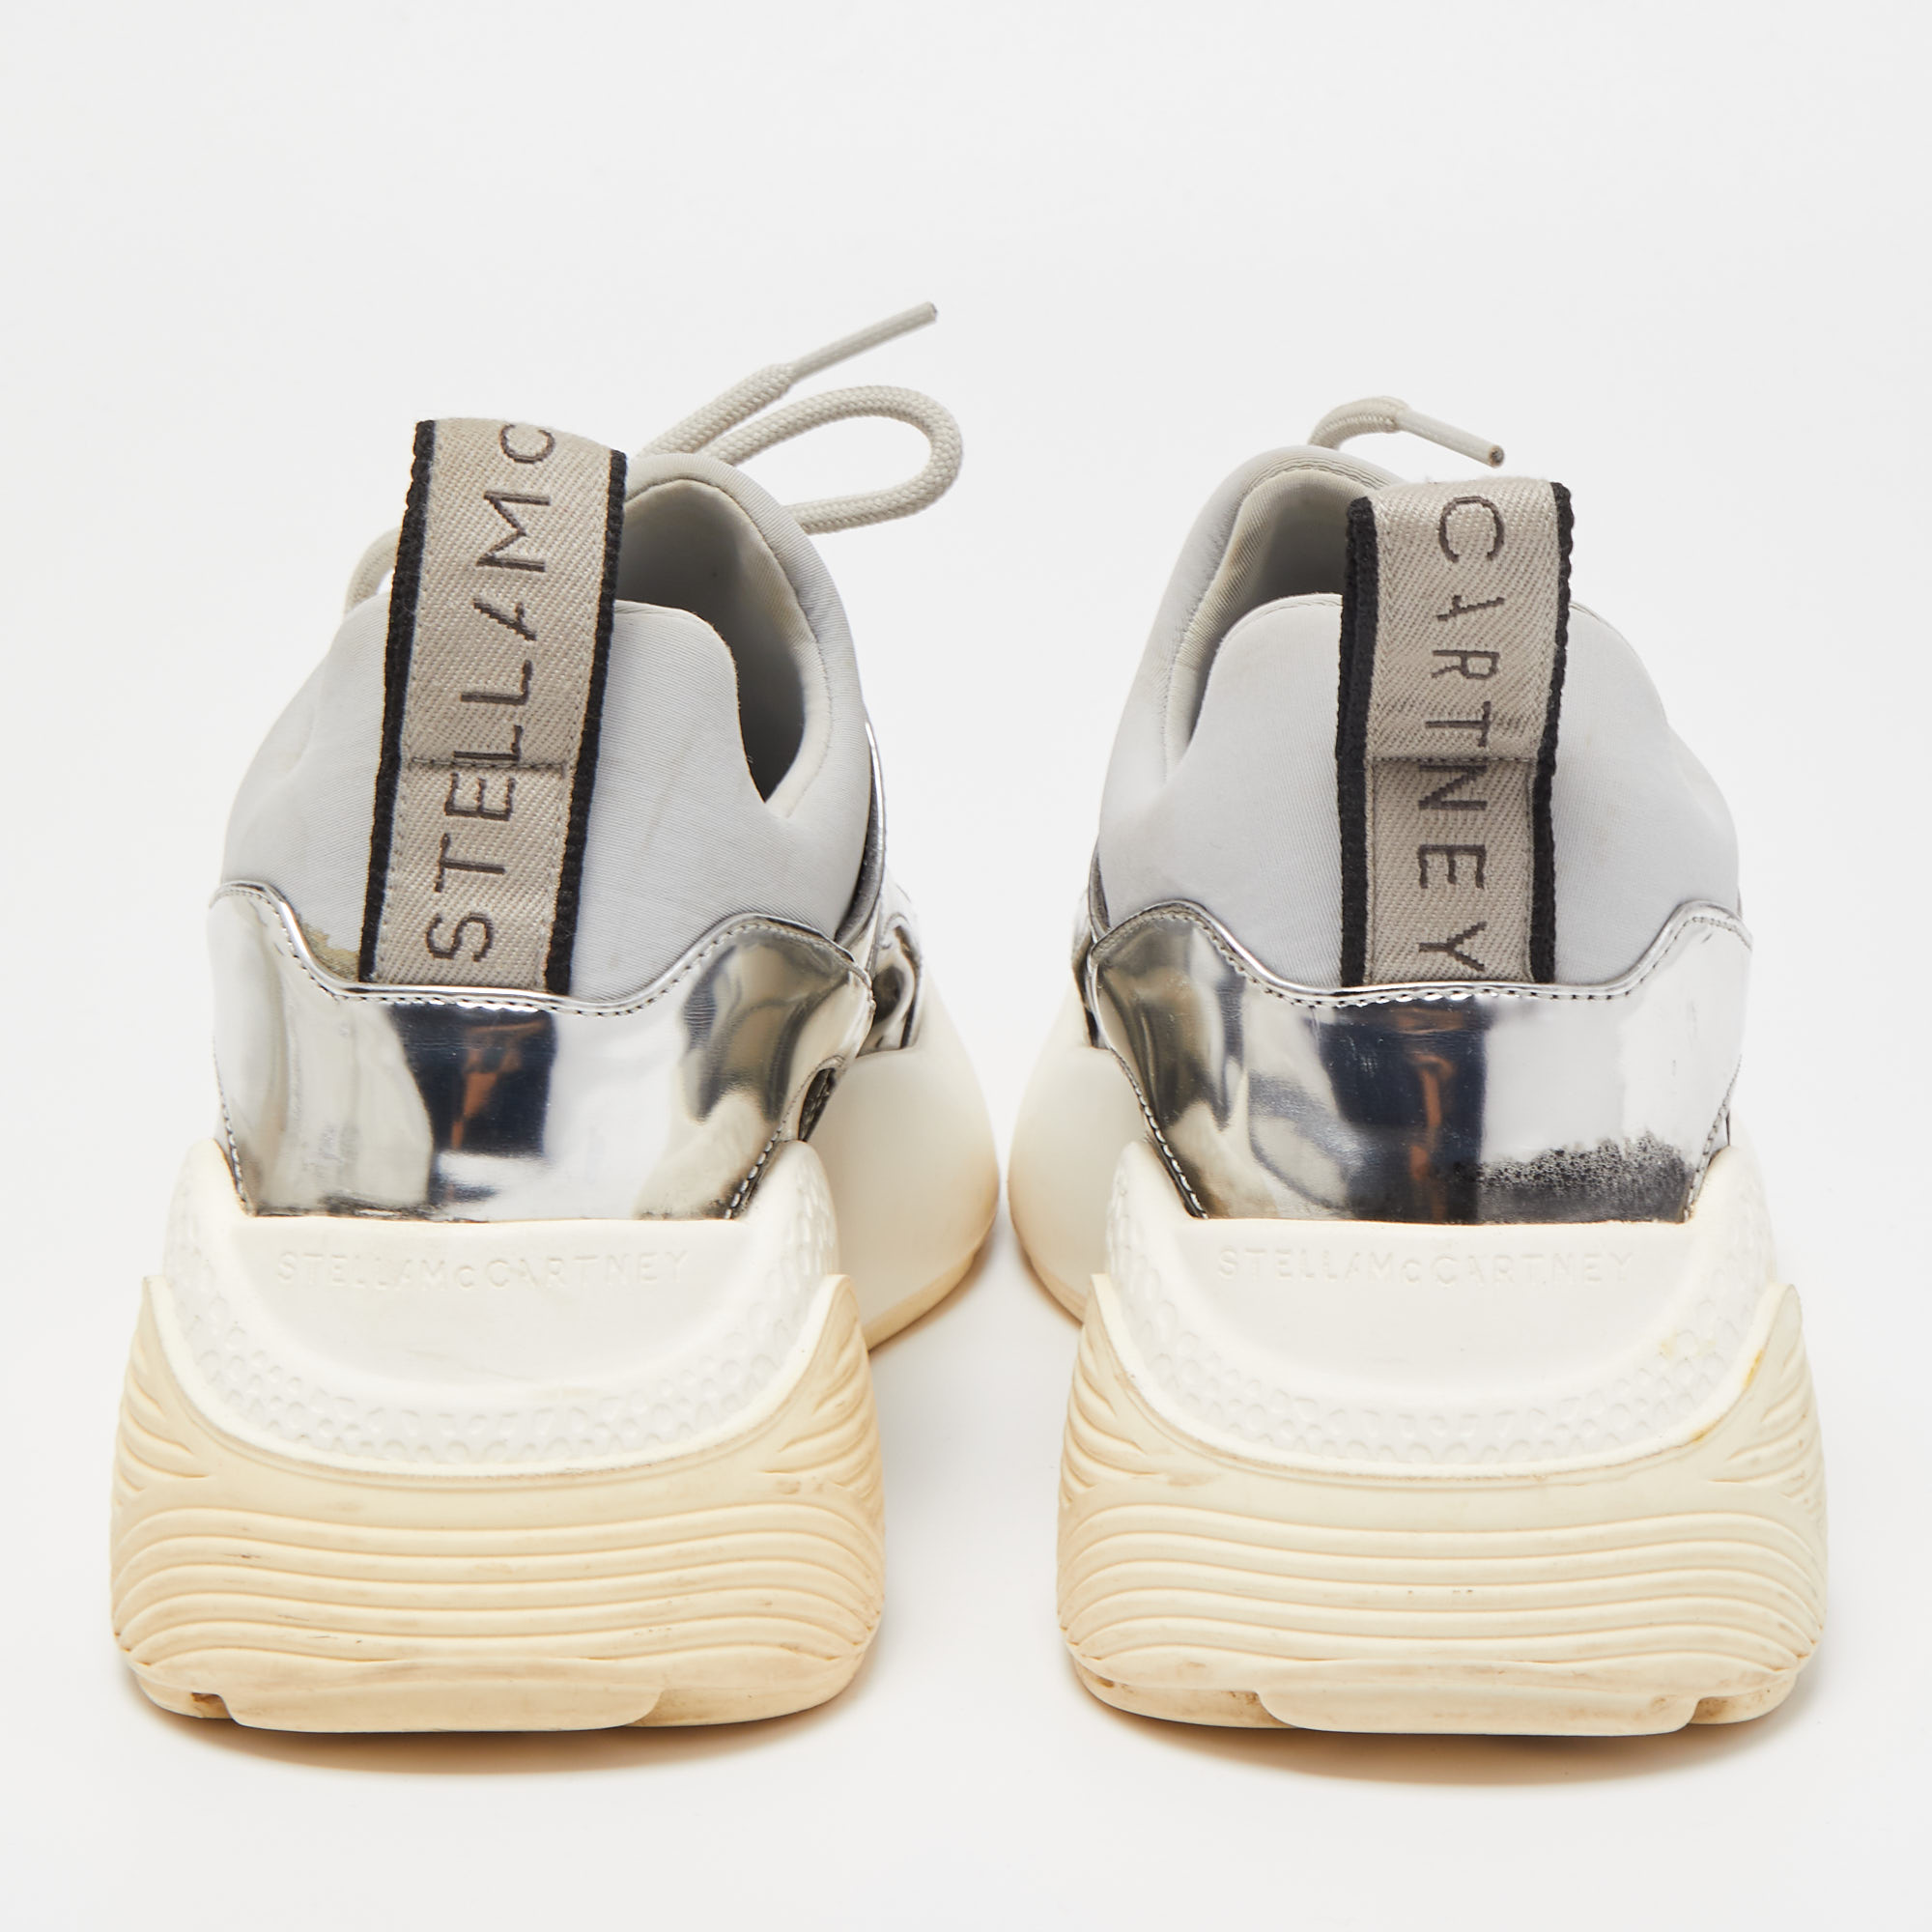 Stella McCartney Silver/Grey Faux Leather And Neoprene Eclypse Sneakers Size 36.5